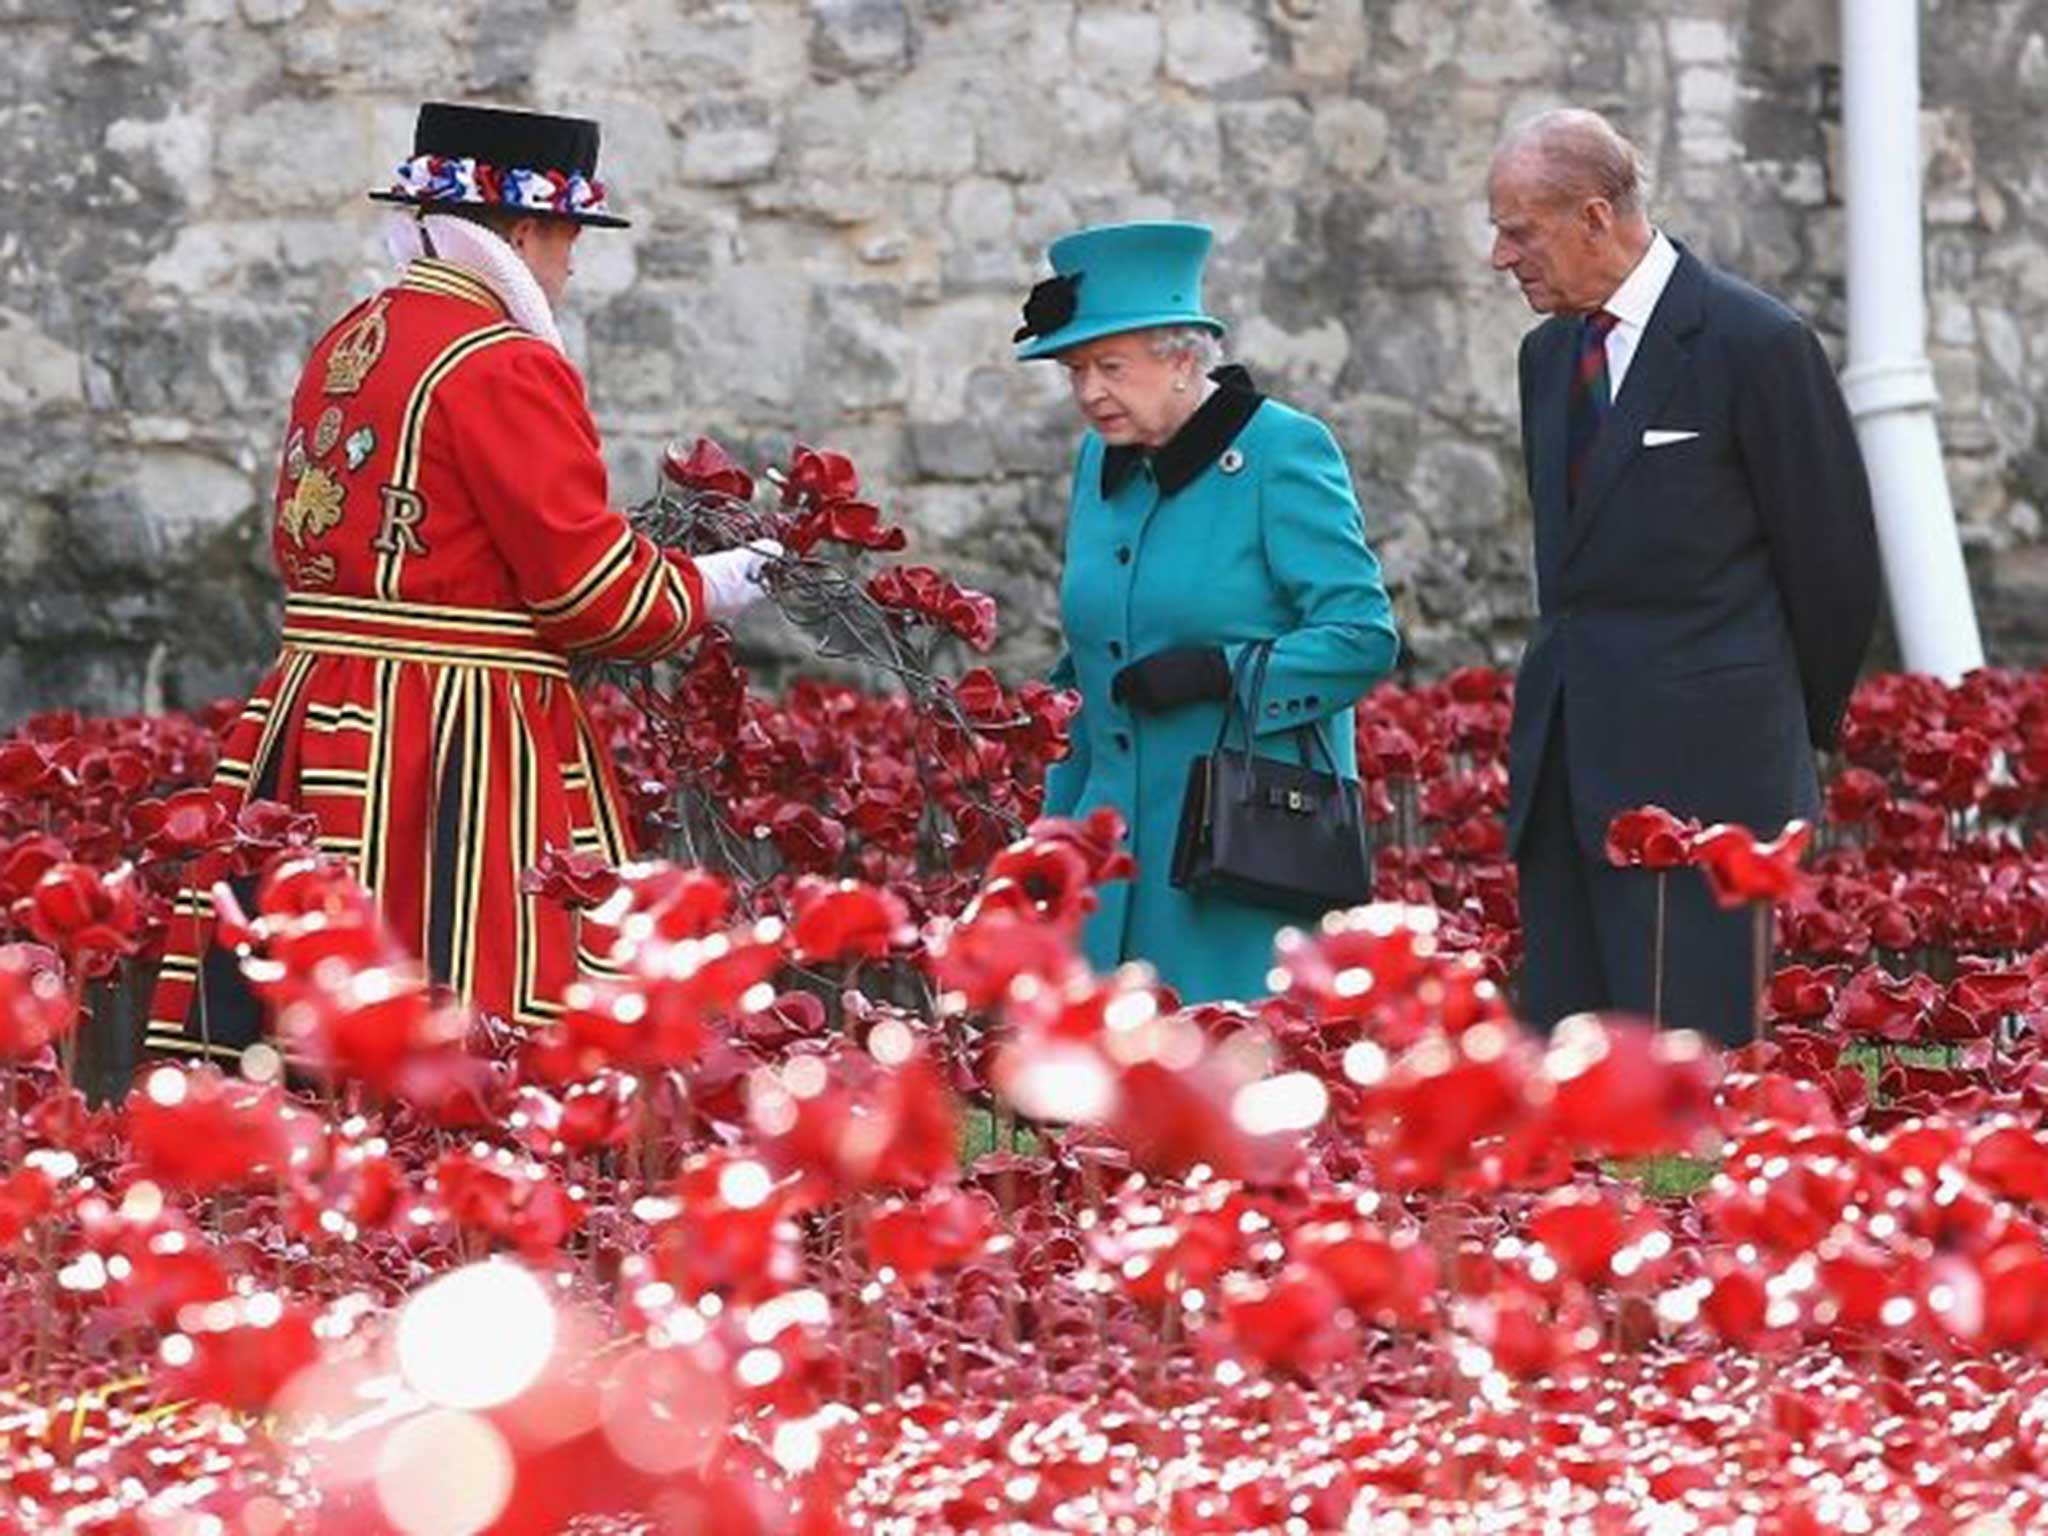 Queen Elizabeth II and Prince Philip, Duke of Edinburgh visit the installation